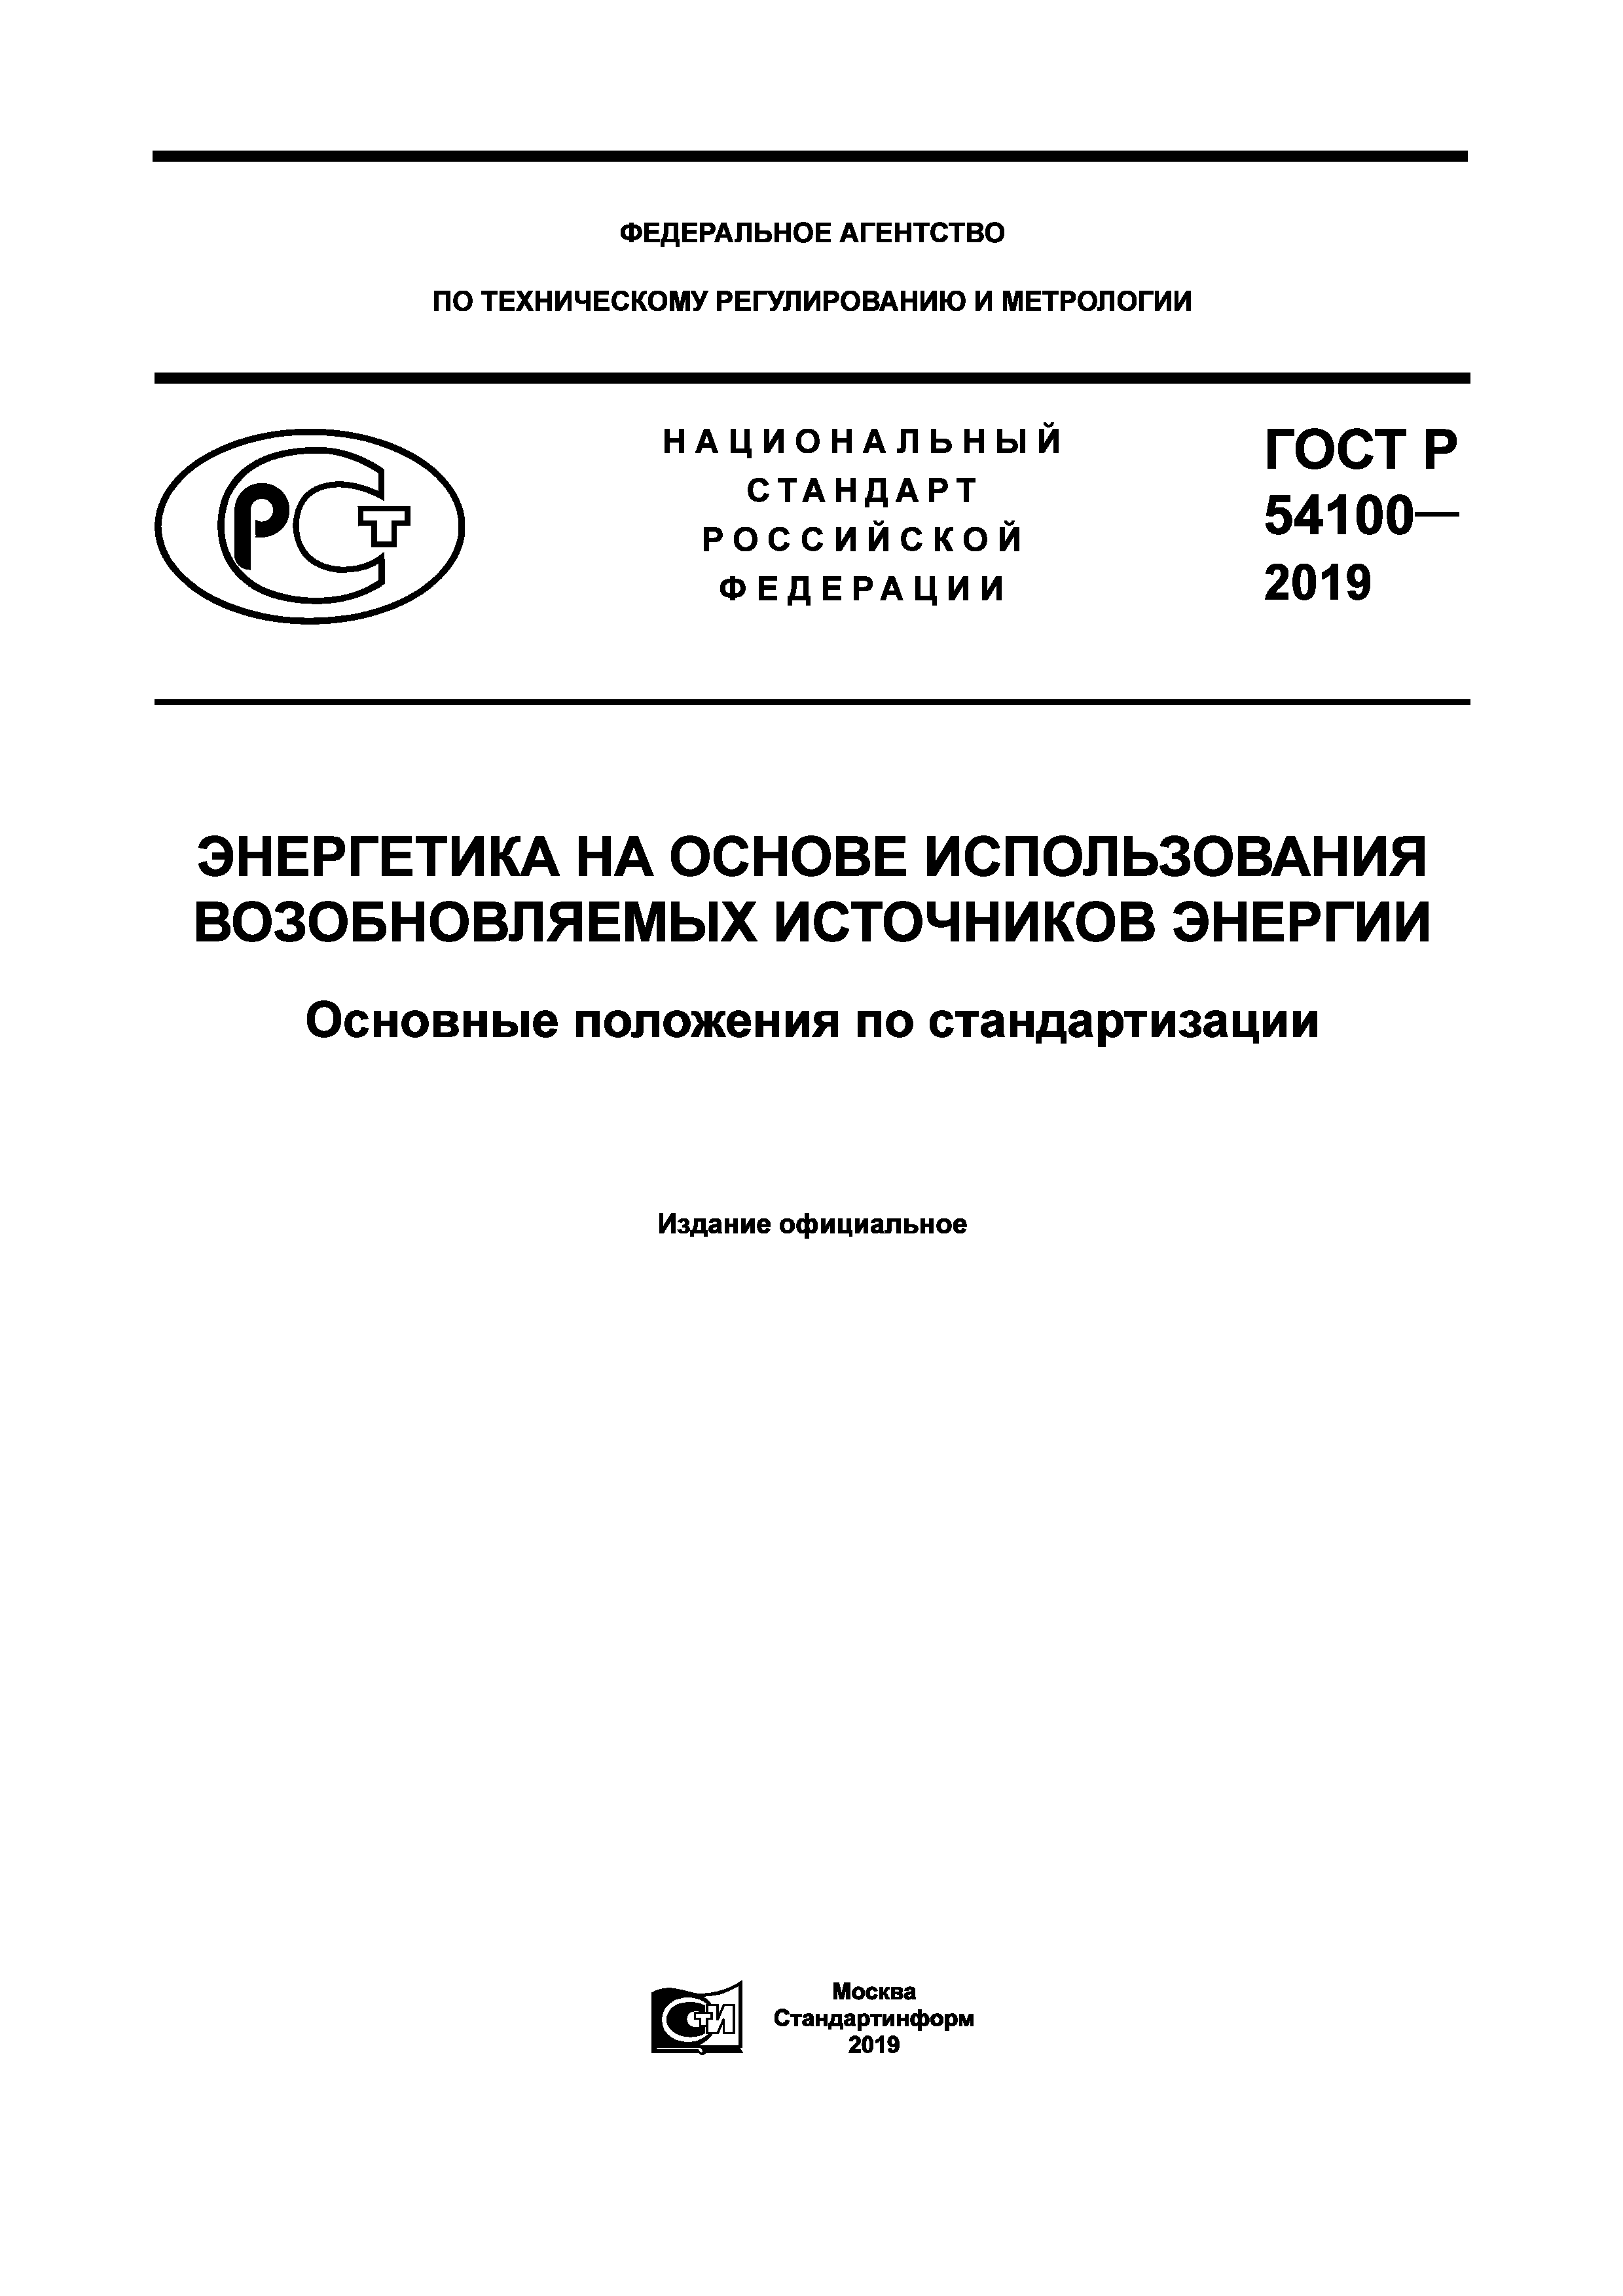 ГОСТ Р 54100-2019